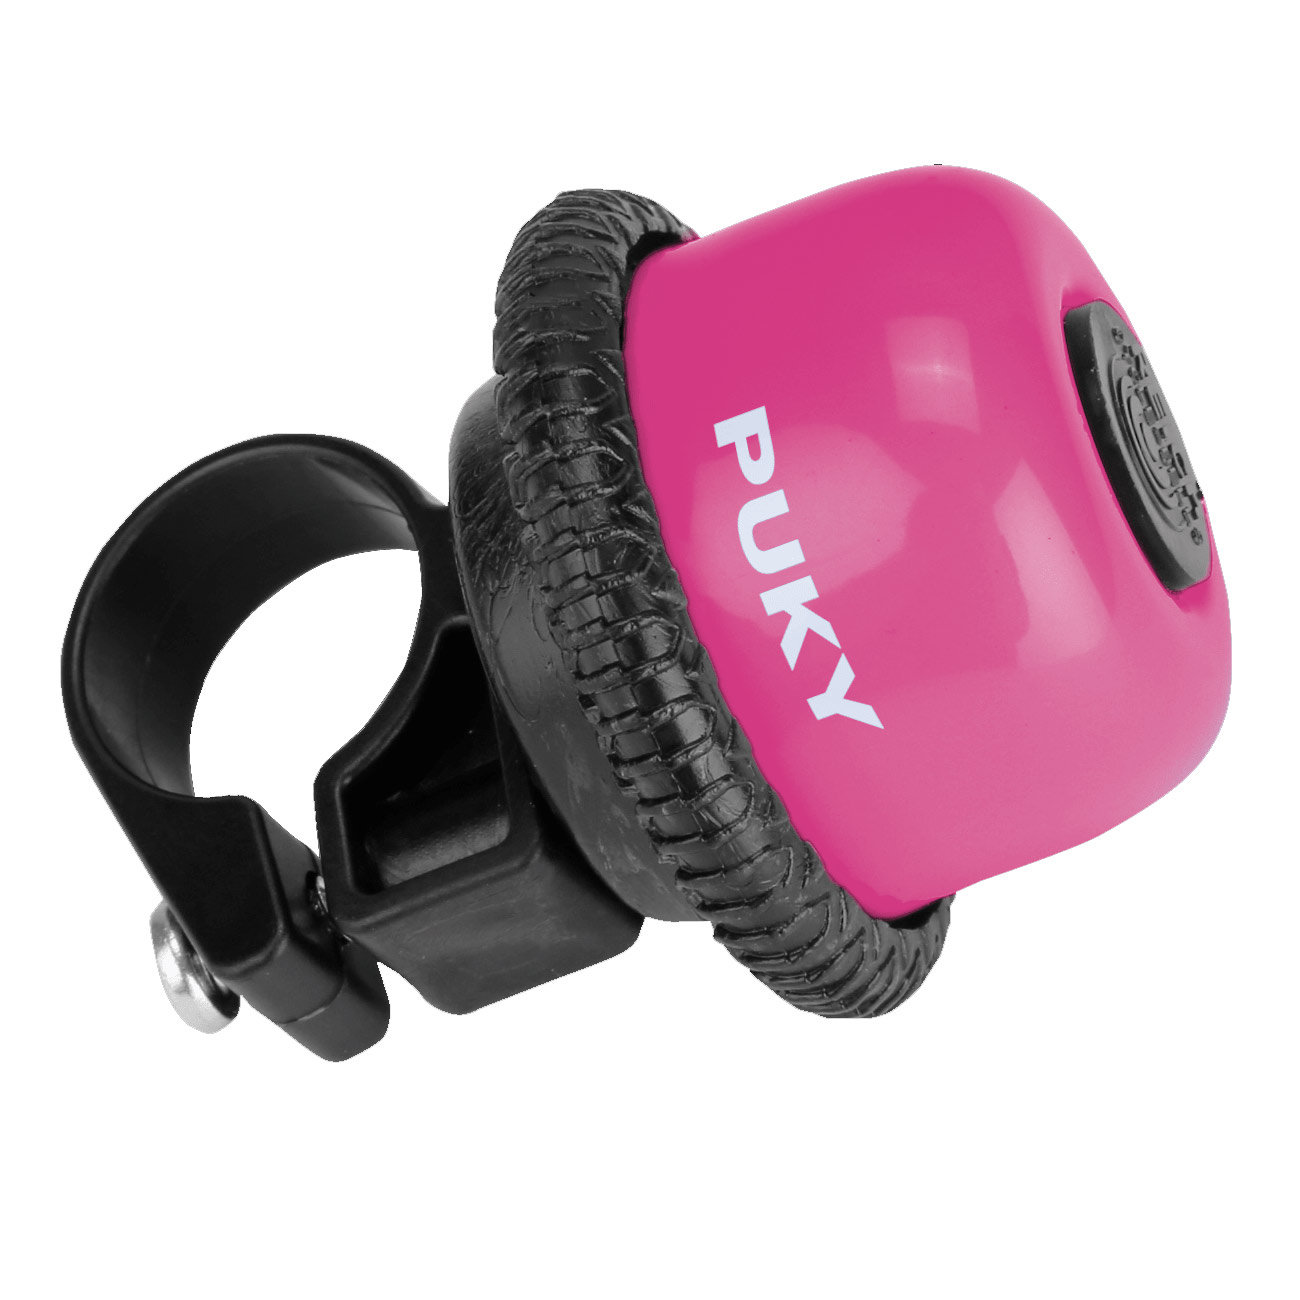 Productfoto van Puky G 20 Roterende Speelbel - pink